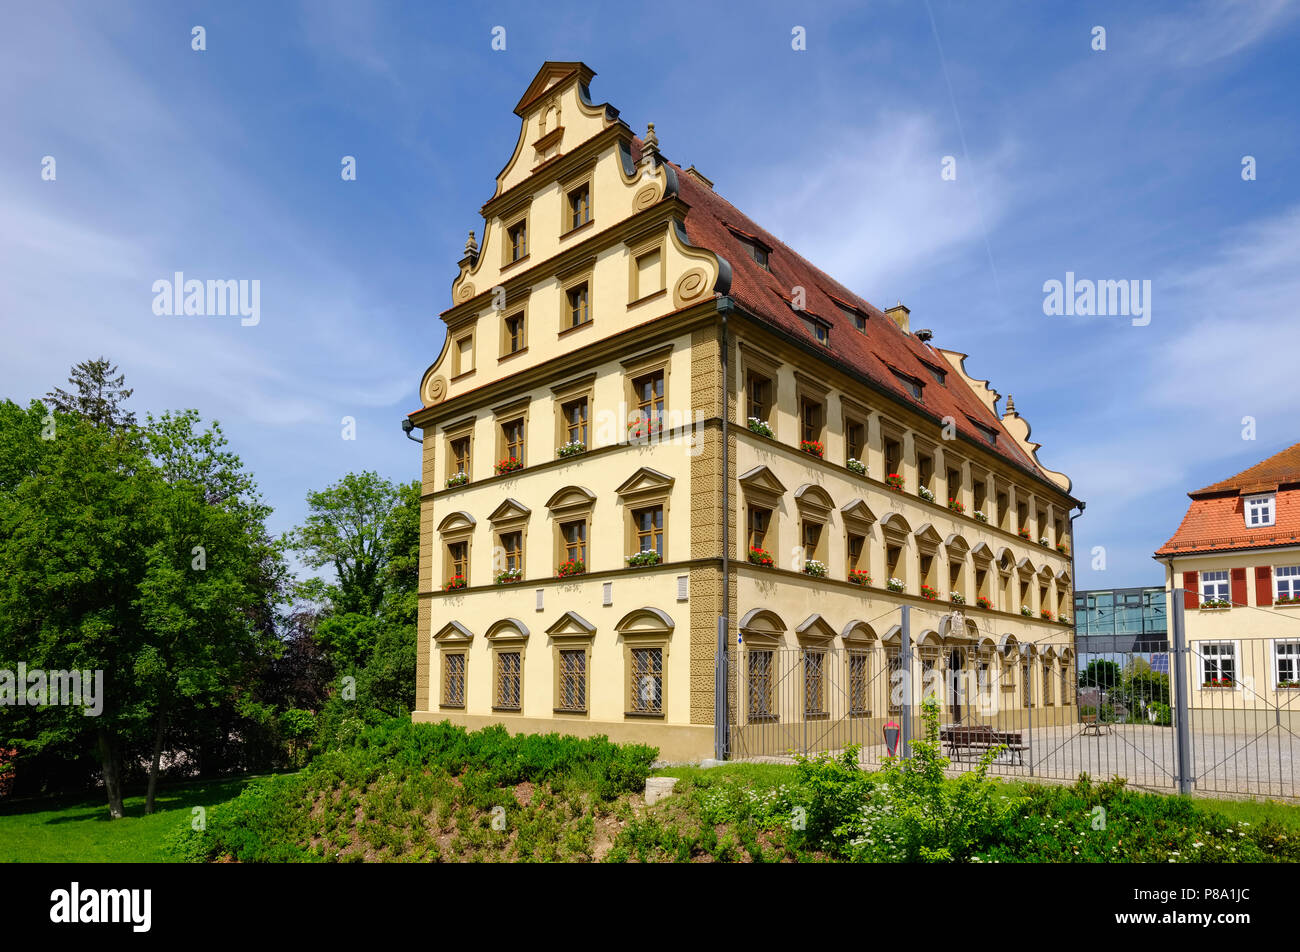 Lower Castle, Ichenhausen, Swabia, Bavaria, Germany Stock Photo